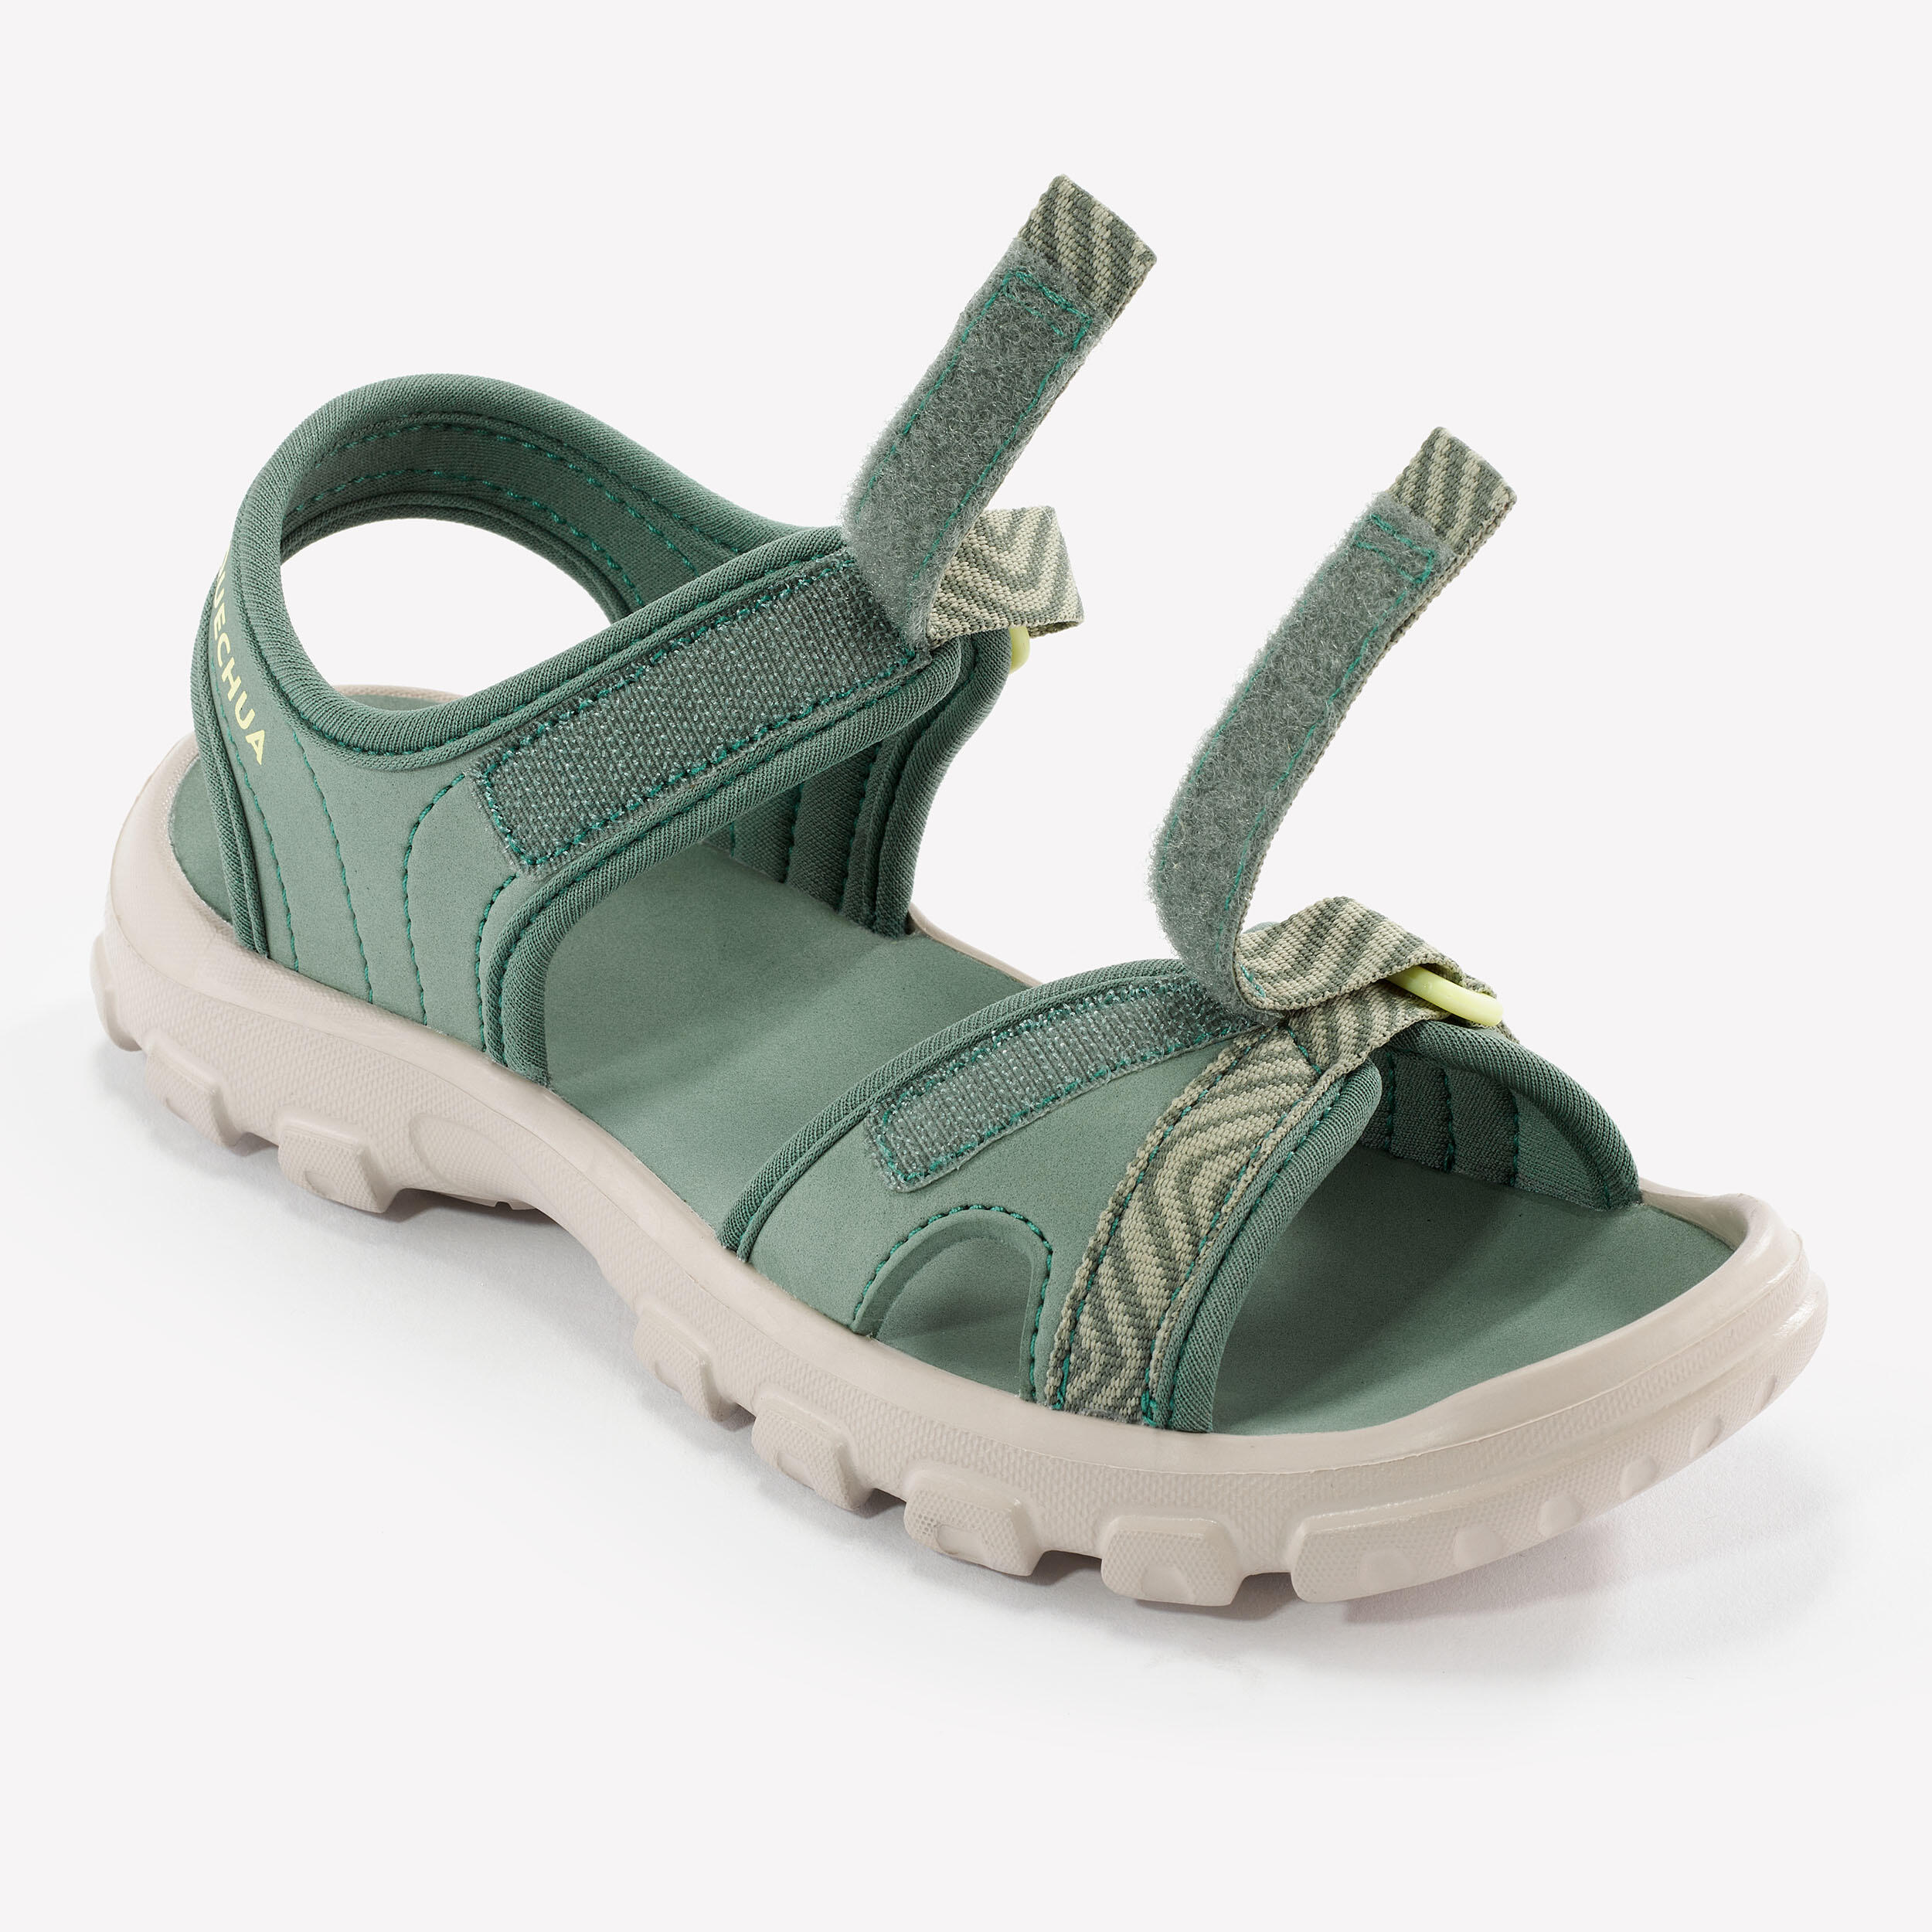 Kids’ Hiking Sandals  - NH100 - UK Kids size 6.5 to 12.5 - Khaki 7/10